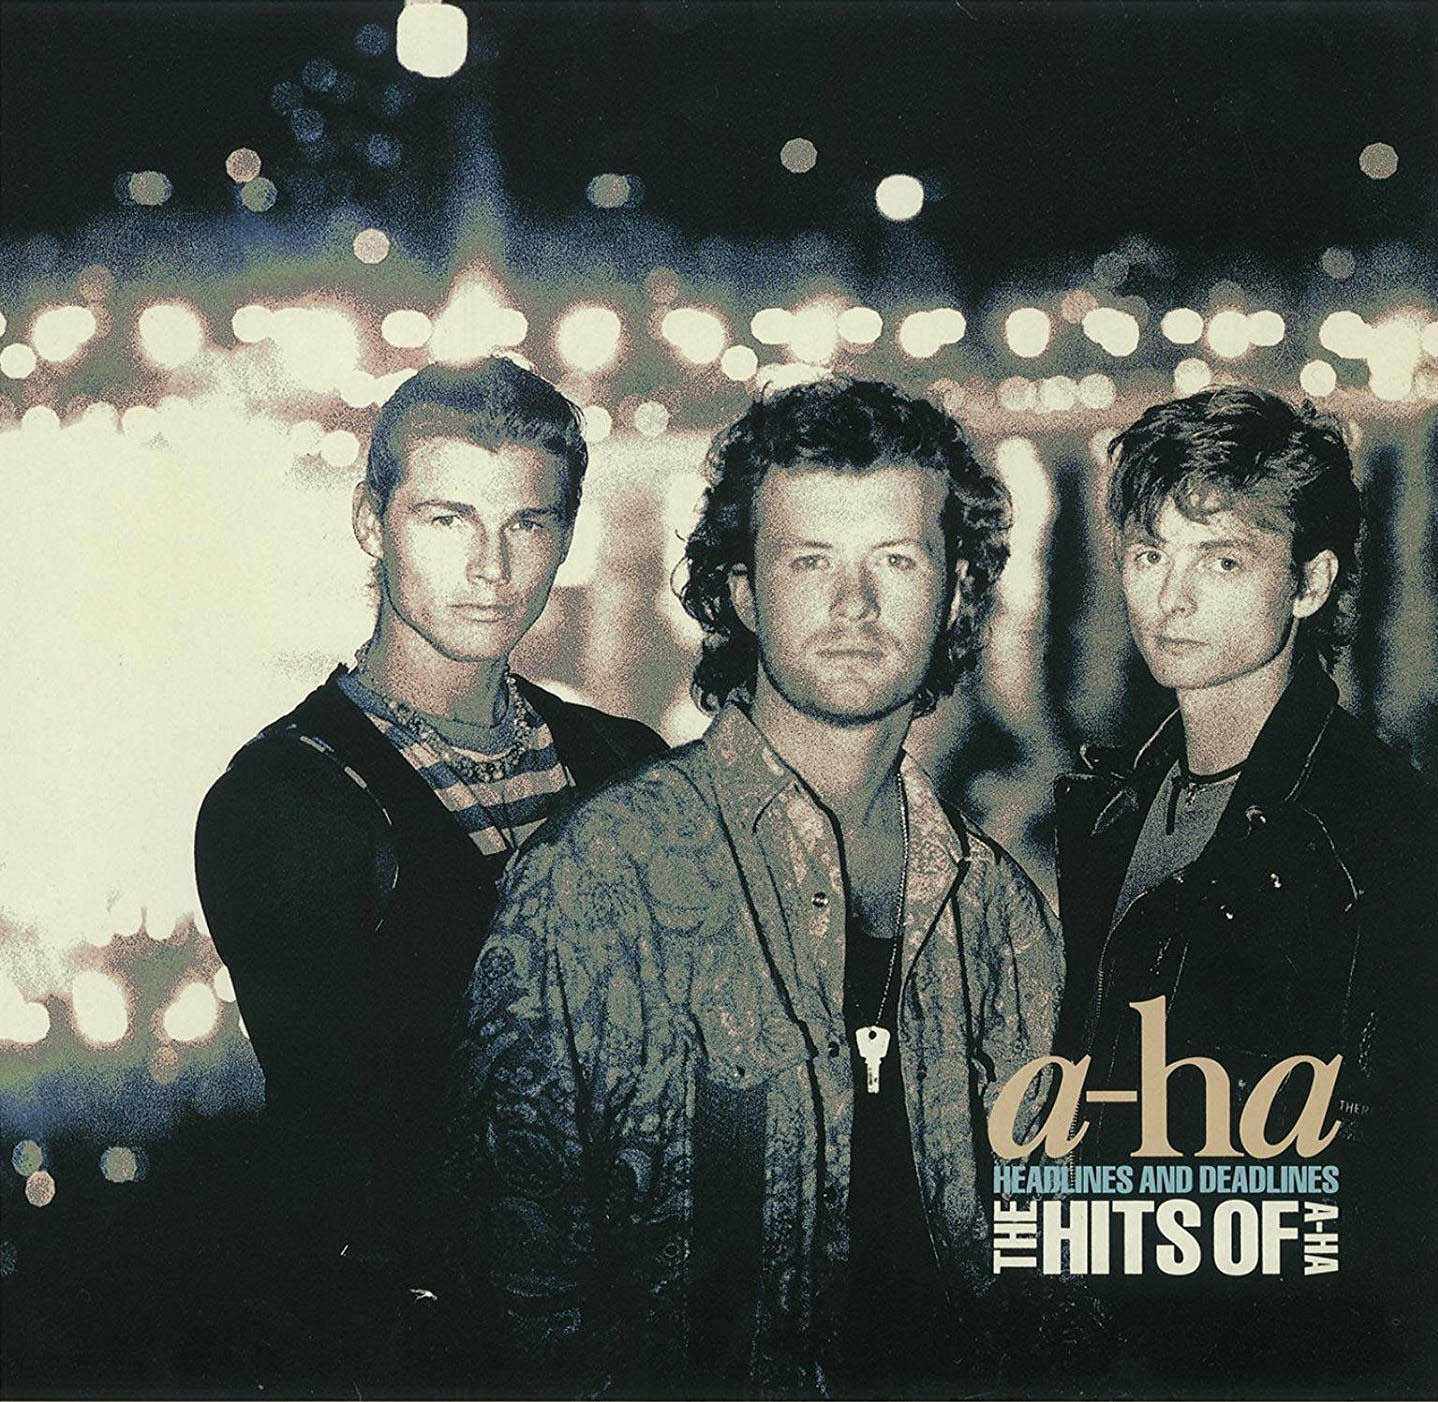 A-Ha Headlines Deadlines-The A-Ha And (Vinyl) - of - Hits